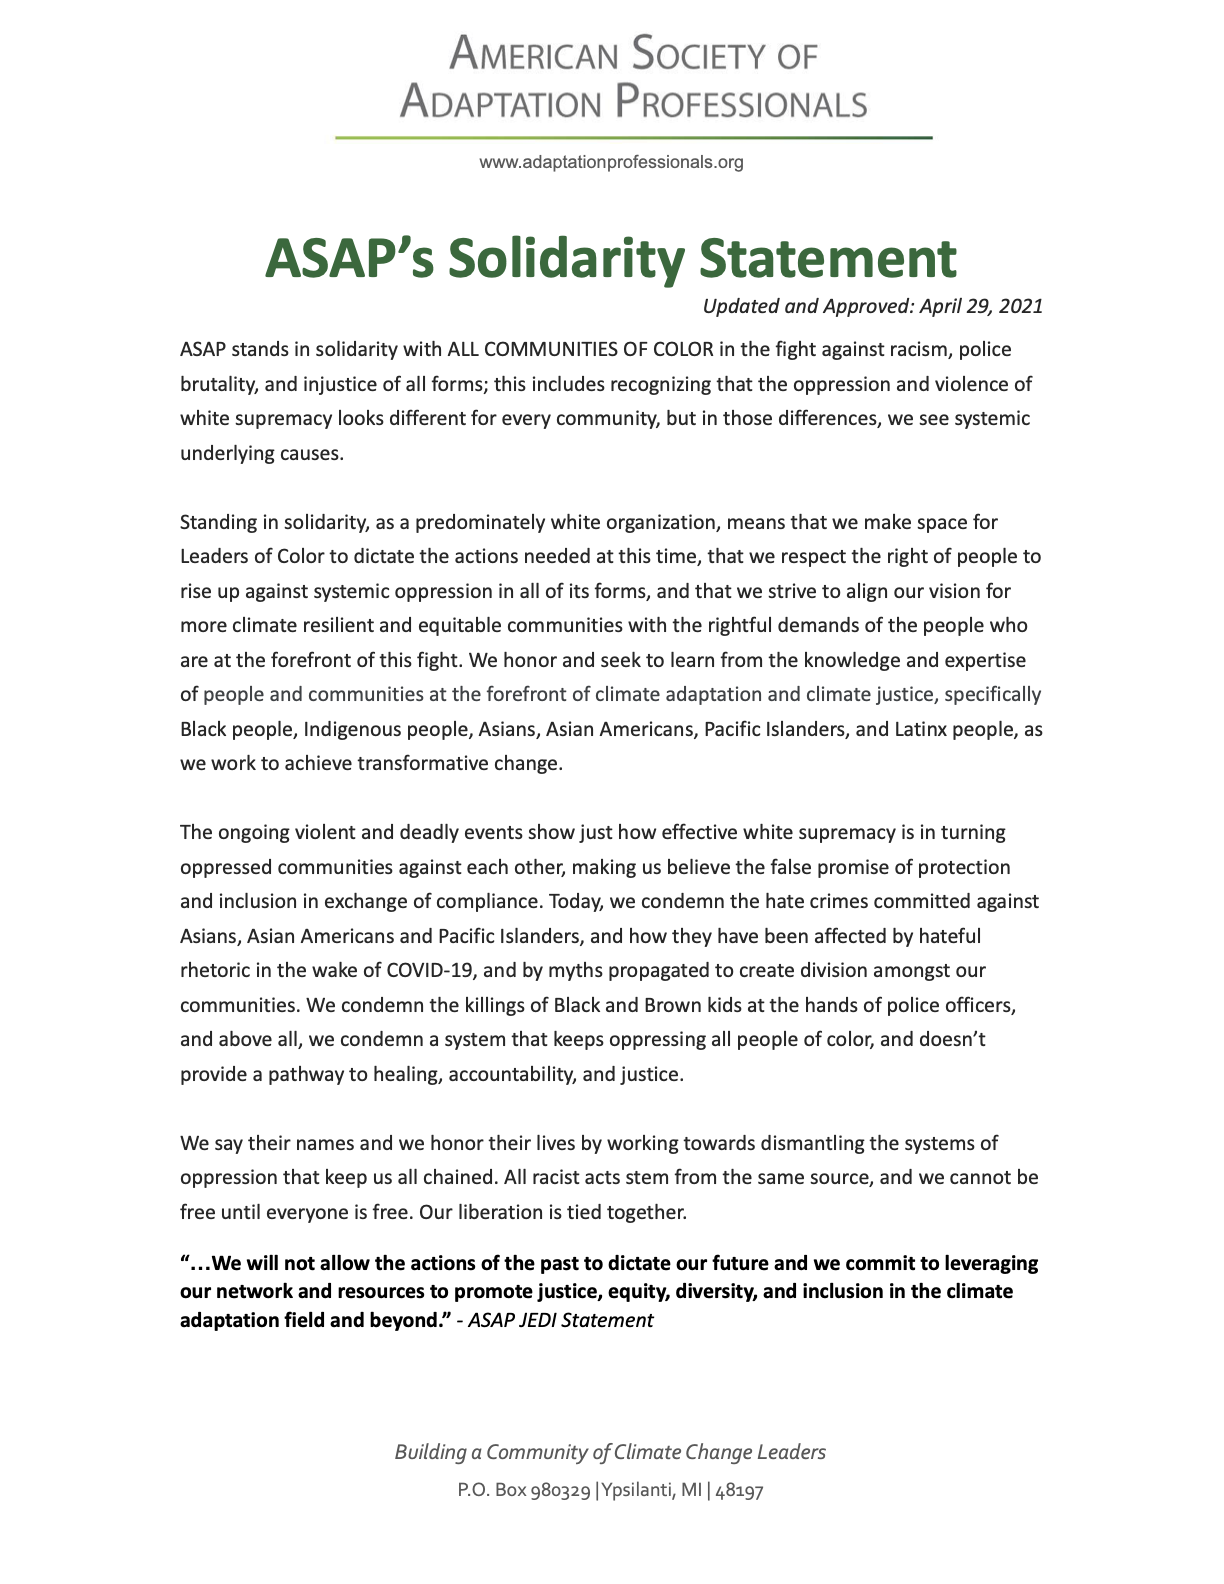 ASAP-Solidarity-Statement-Updated-April-2021-1.png